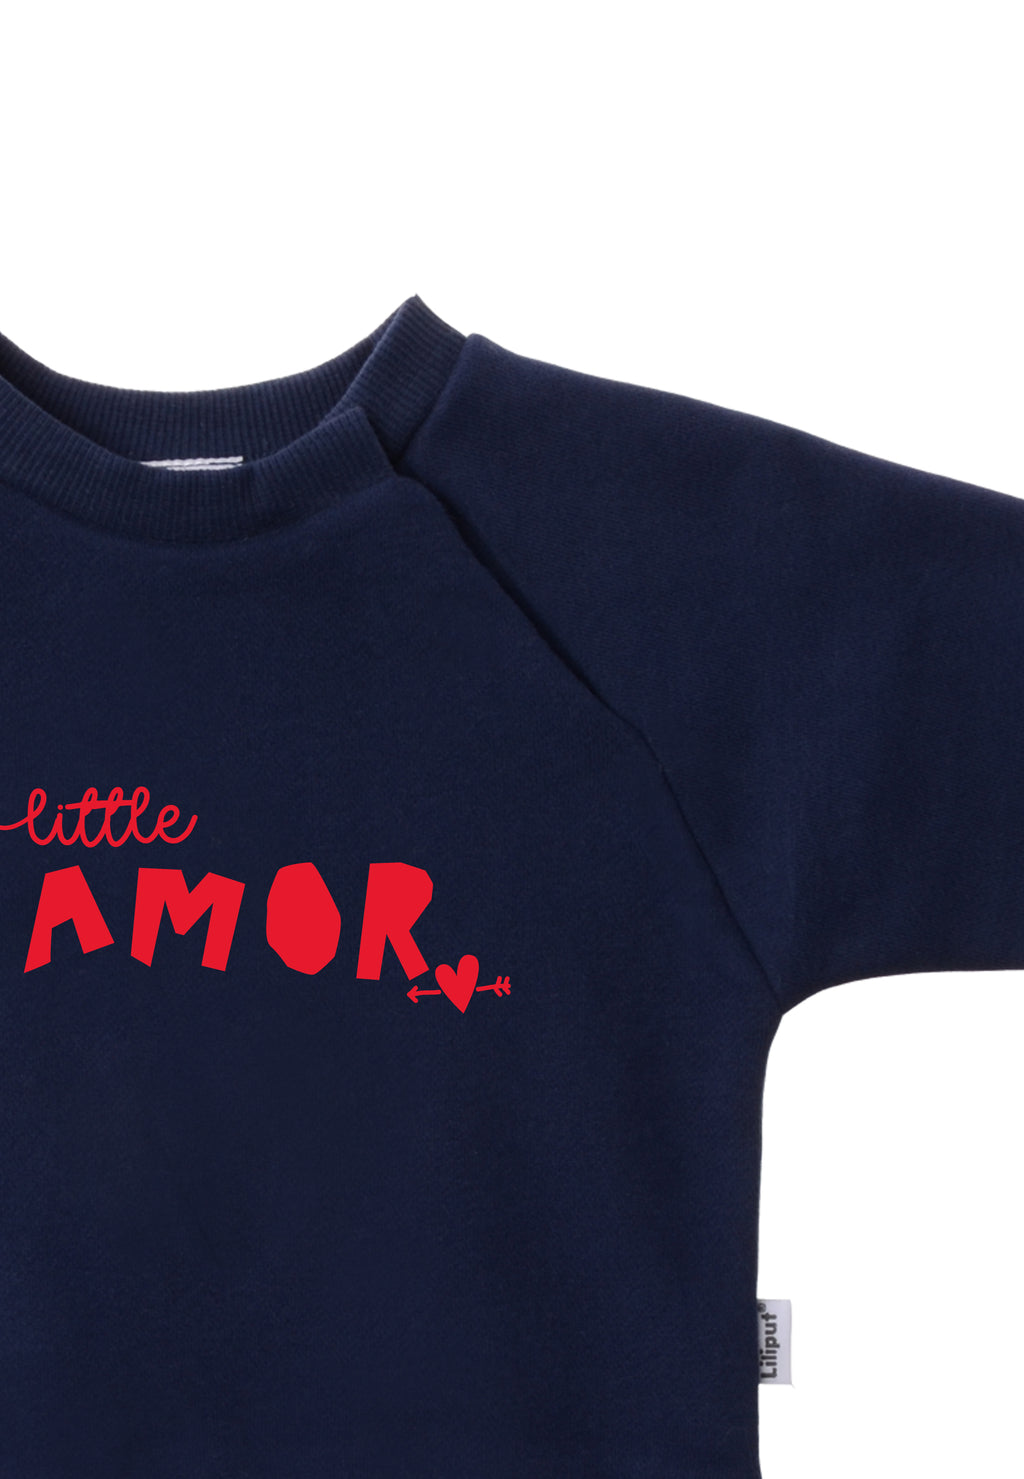 Sweatshirt in dunkelblau mit rotem Print "little AMOR"